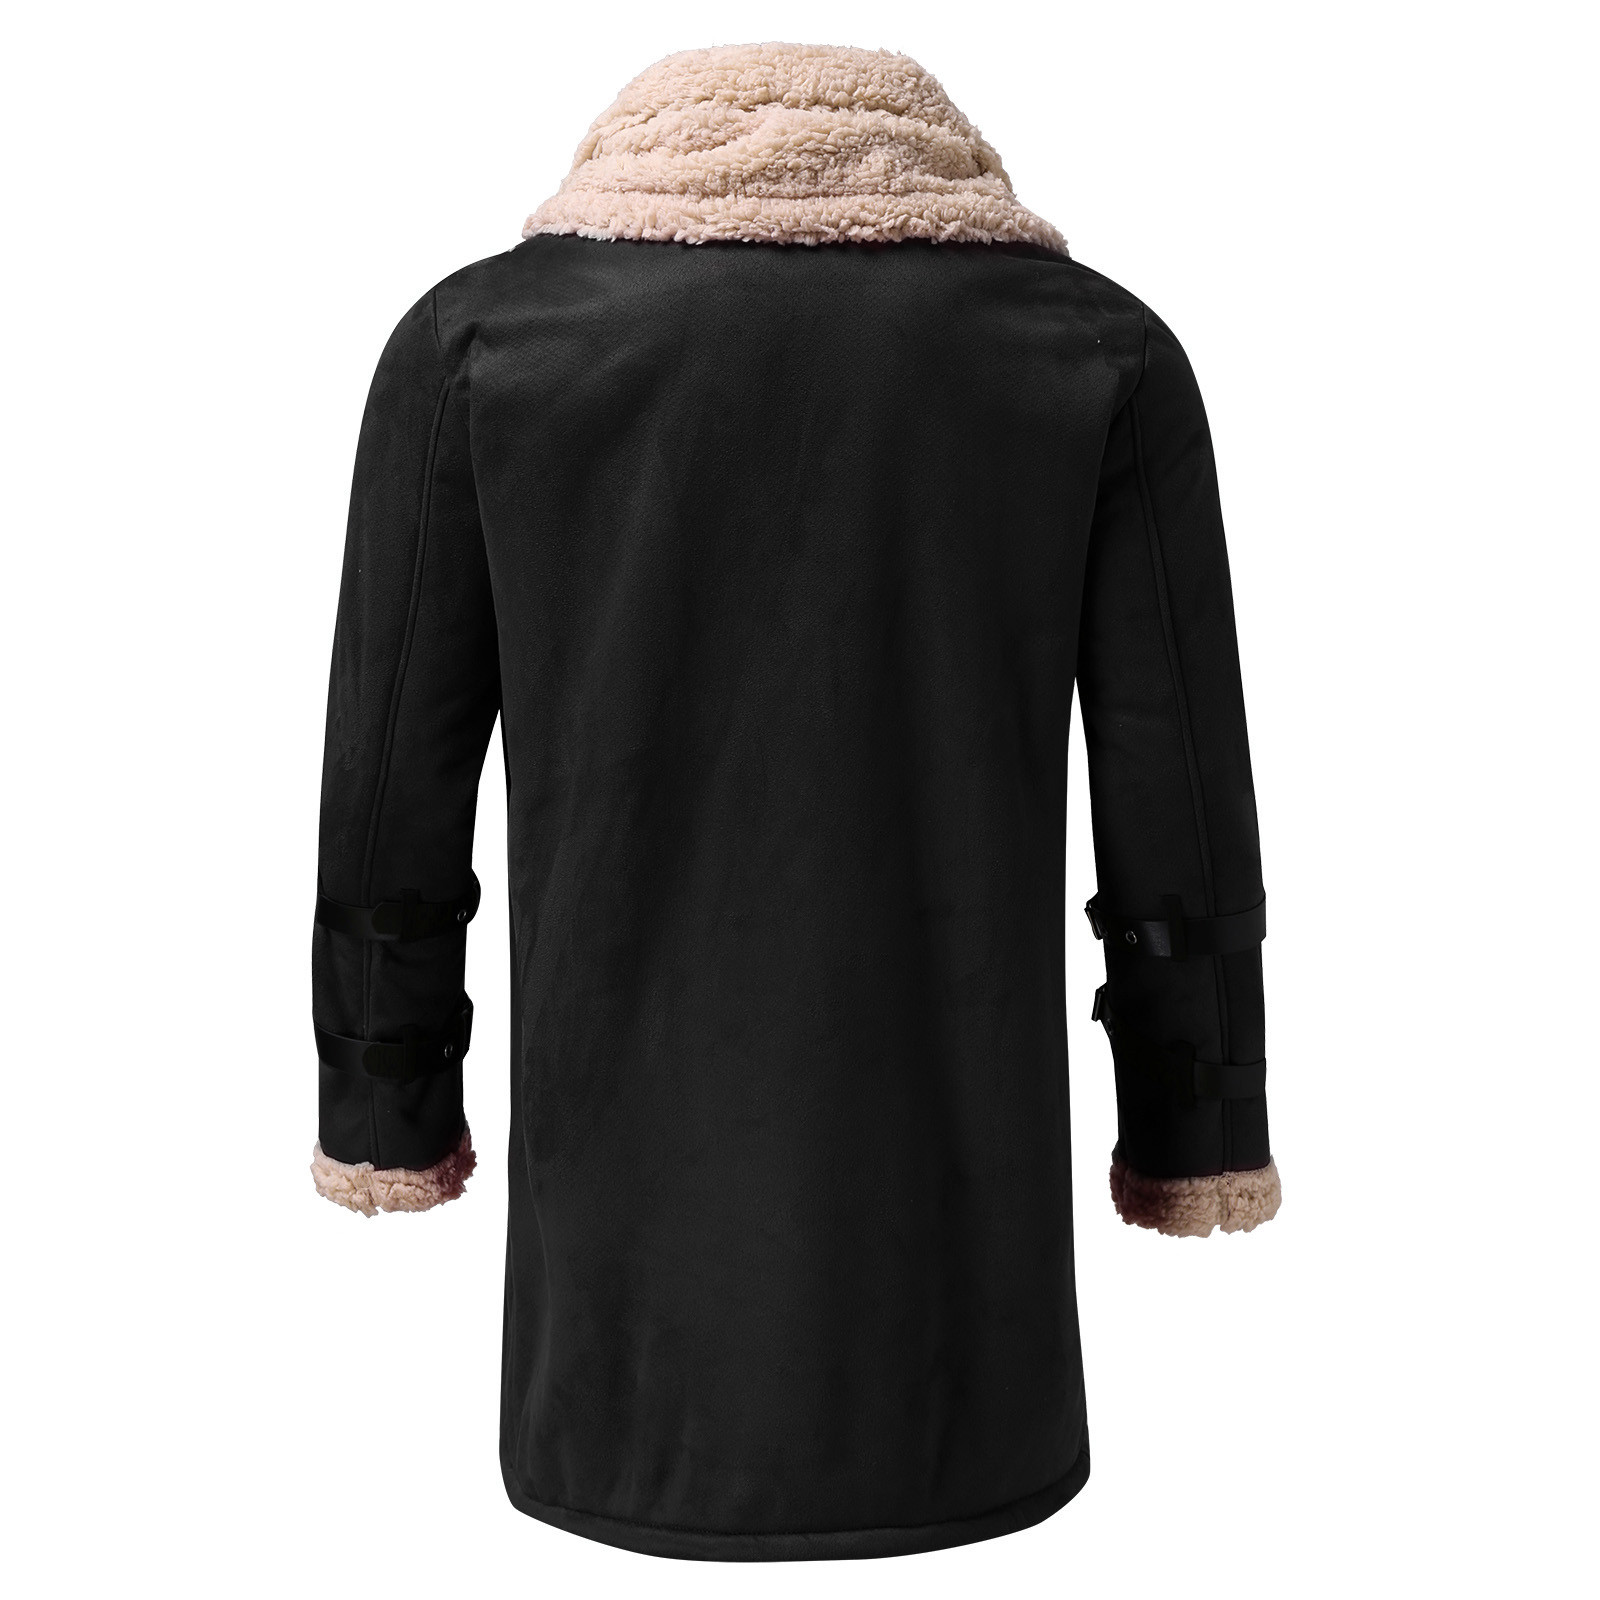 HSMQHJWE Jean Jackets For Men Long Jacket With Hood Men Men Plus Size Winter Coat Lapel Collar Long Sleeve Padded Leather Jacket Vintage Thicken Coat Sheepskin Jacket Jacket Men Cotton - image 5 of 5